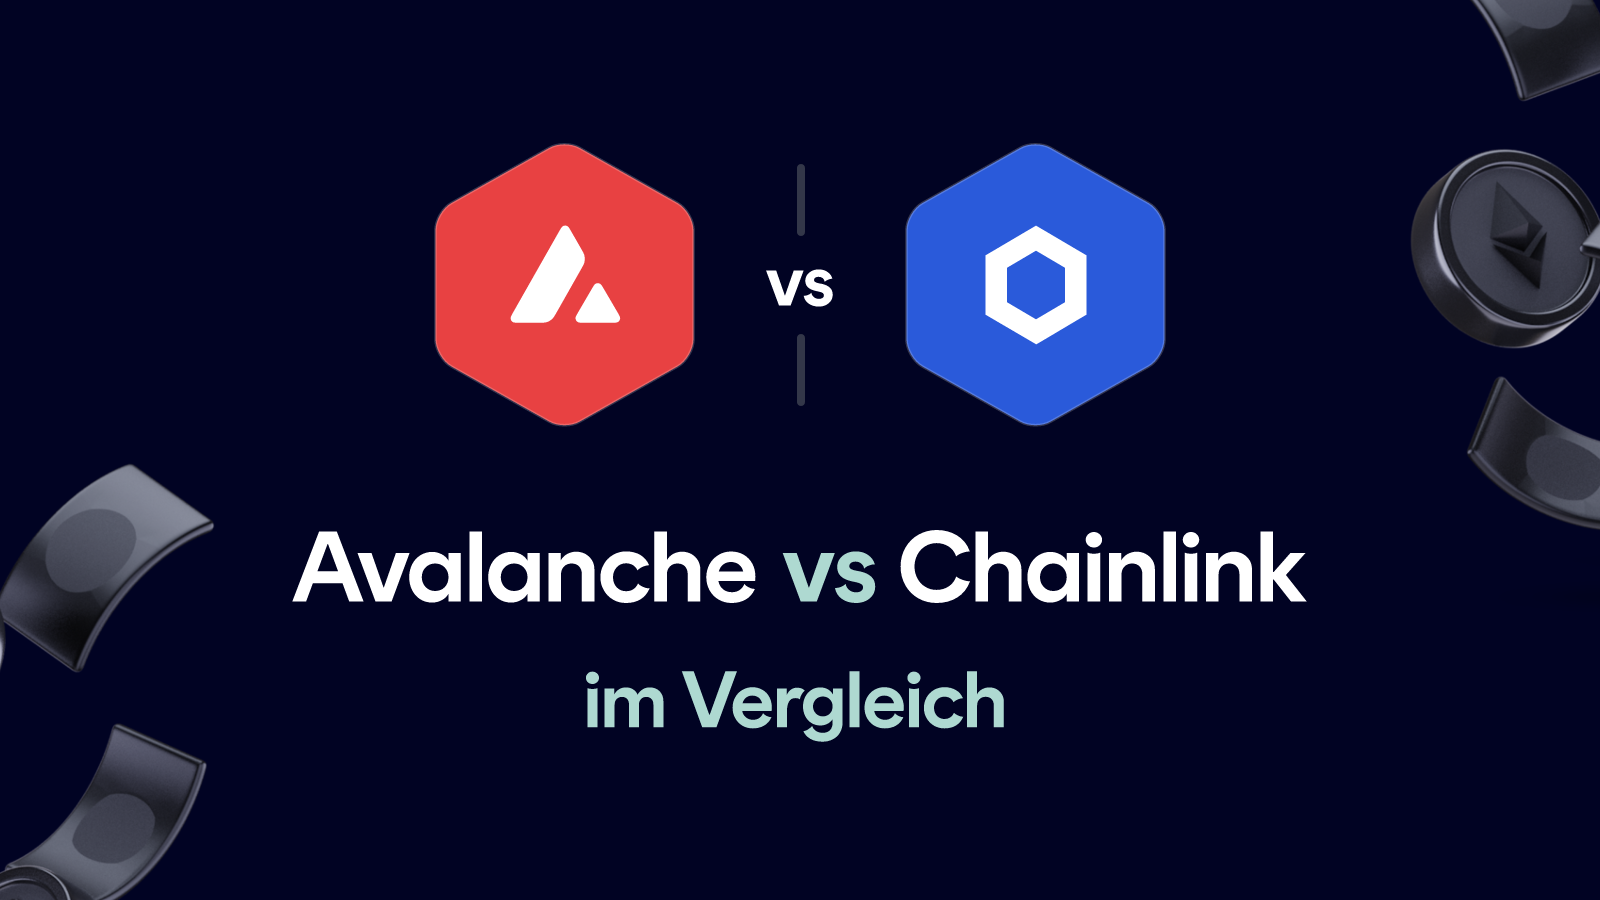 Avalanche vs Chainlink